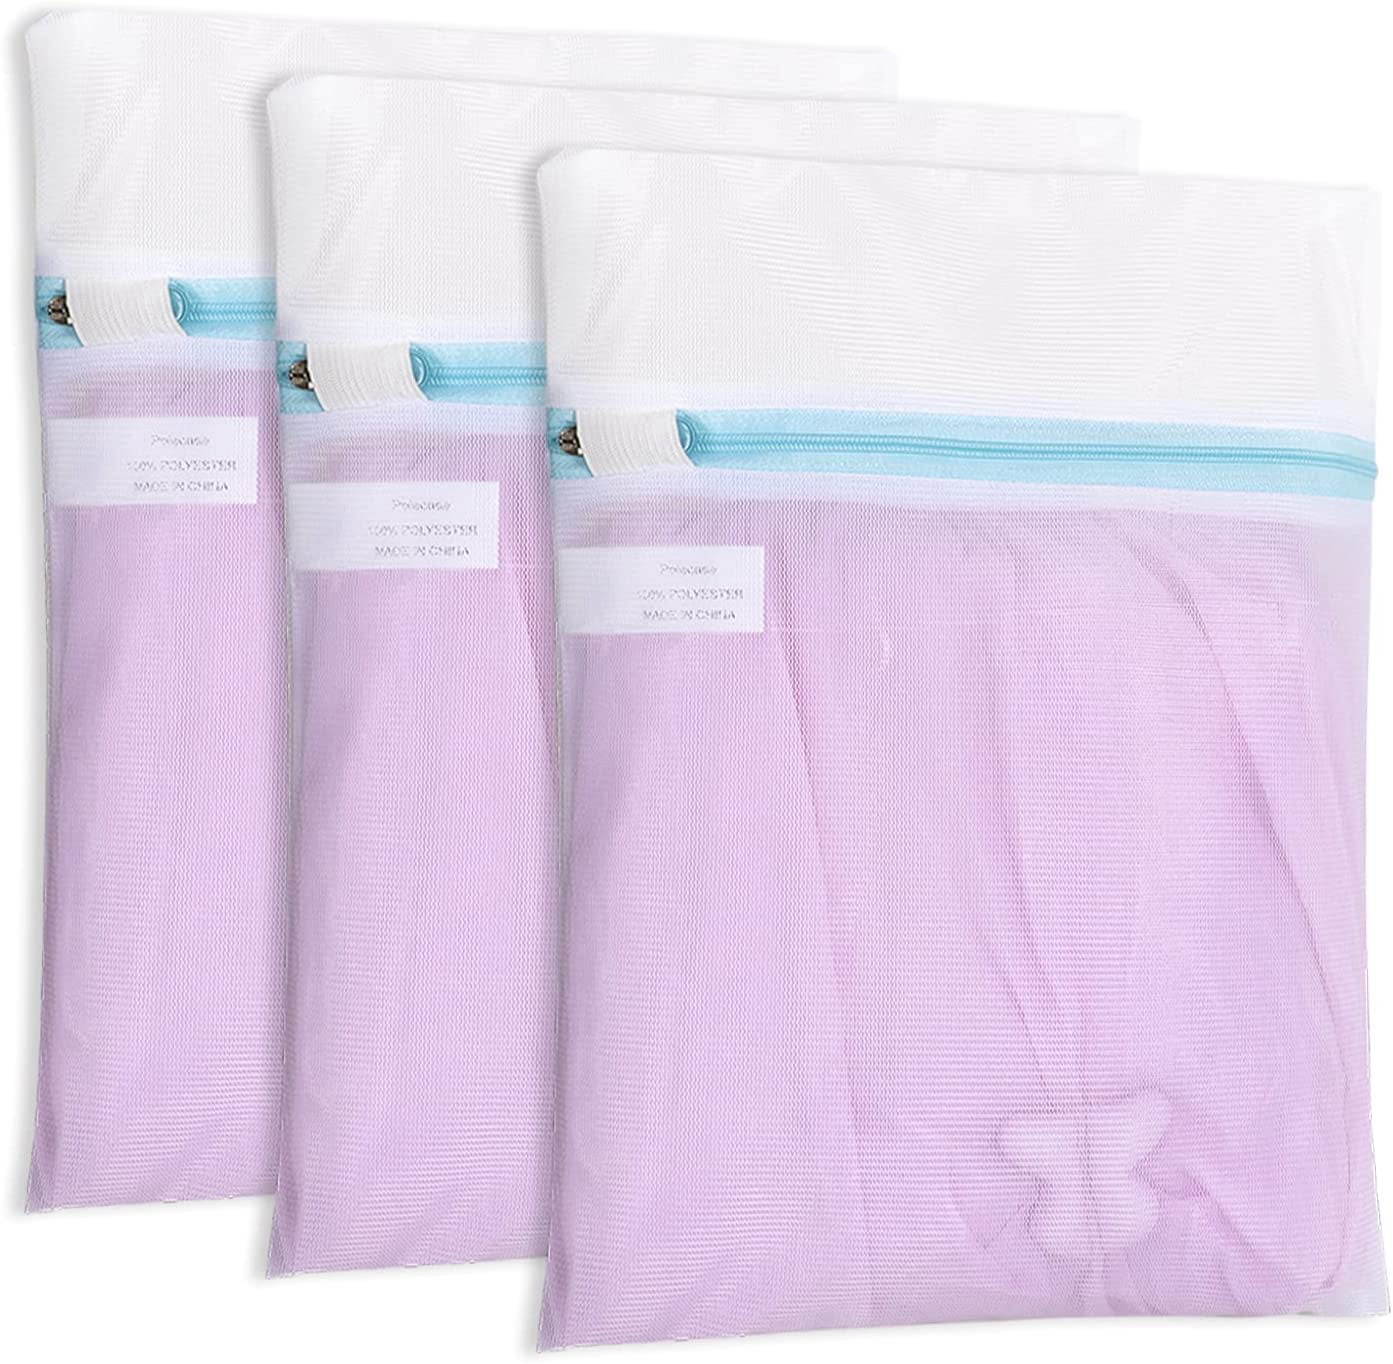 TENRAI 3 Pack 3 Medium Delicates Laundry Bags Bra Fine Mesh Wash Bag Use YKK 